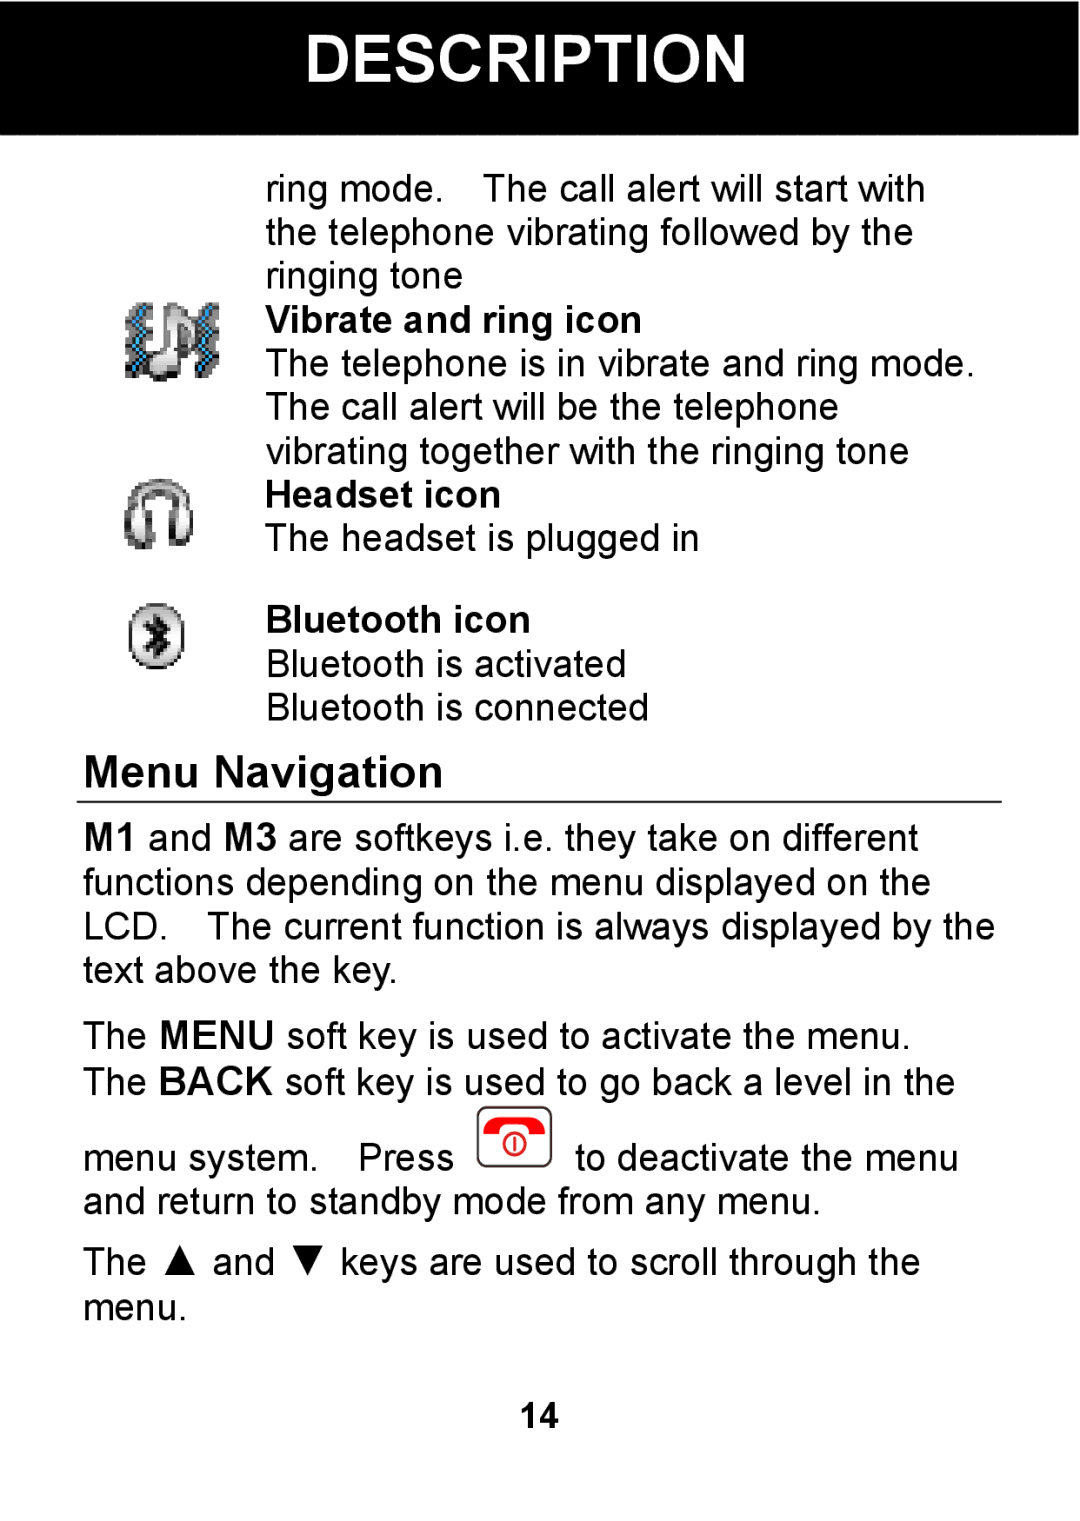 Pal/Pax PAL101 manual Menu Navigation, Vibrate and ring icon, Headset icon, Bluetooth icon 